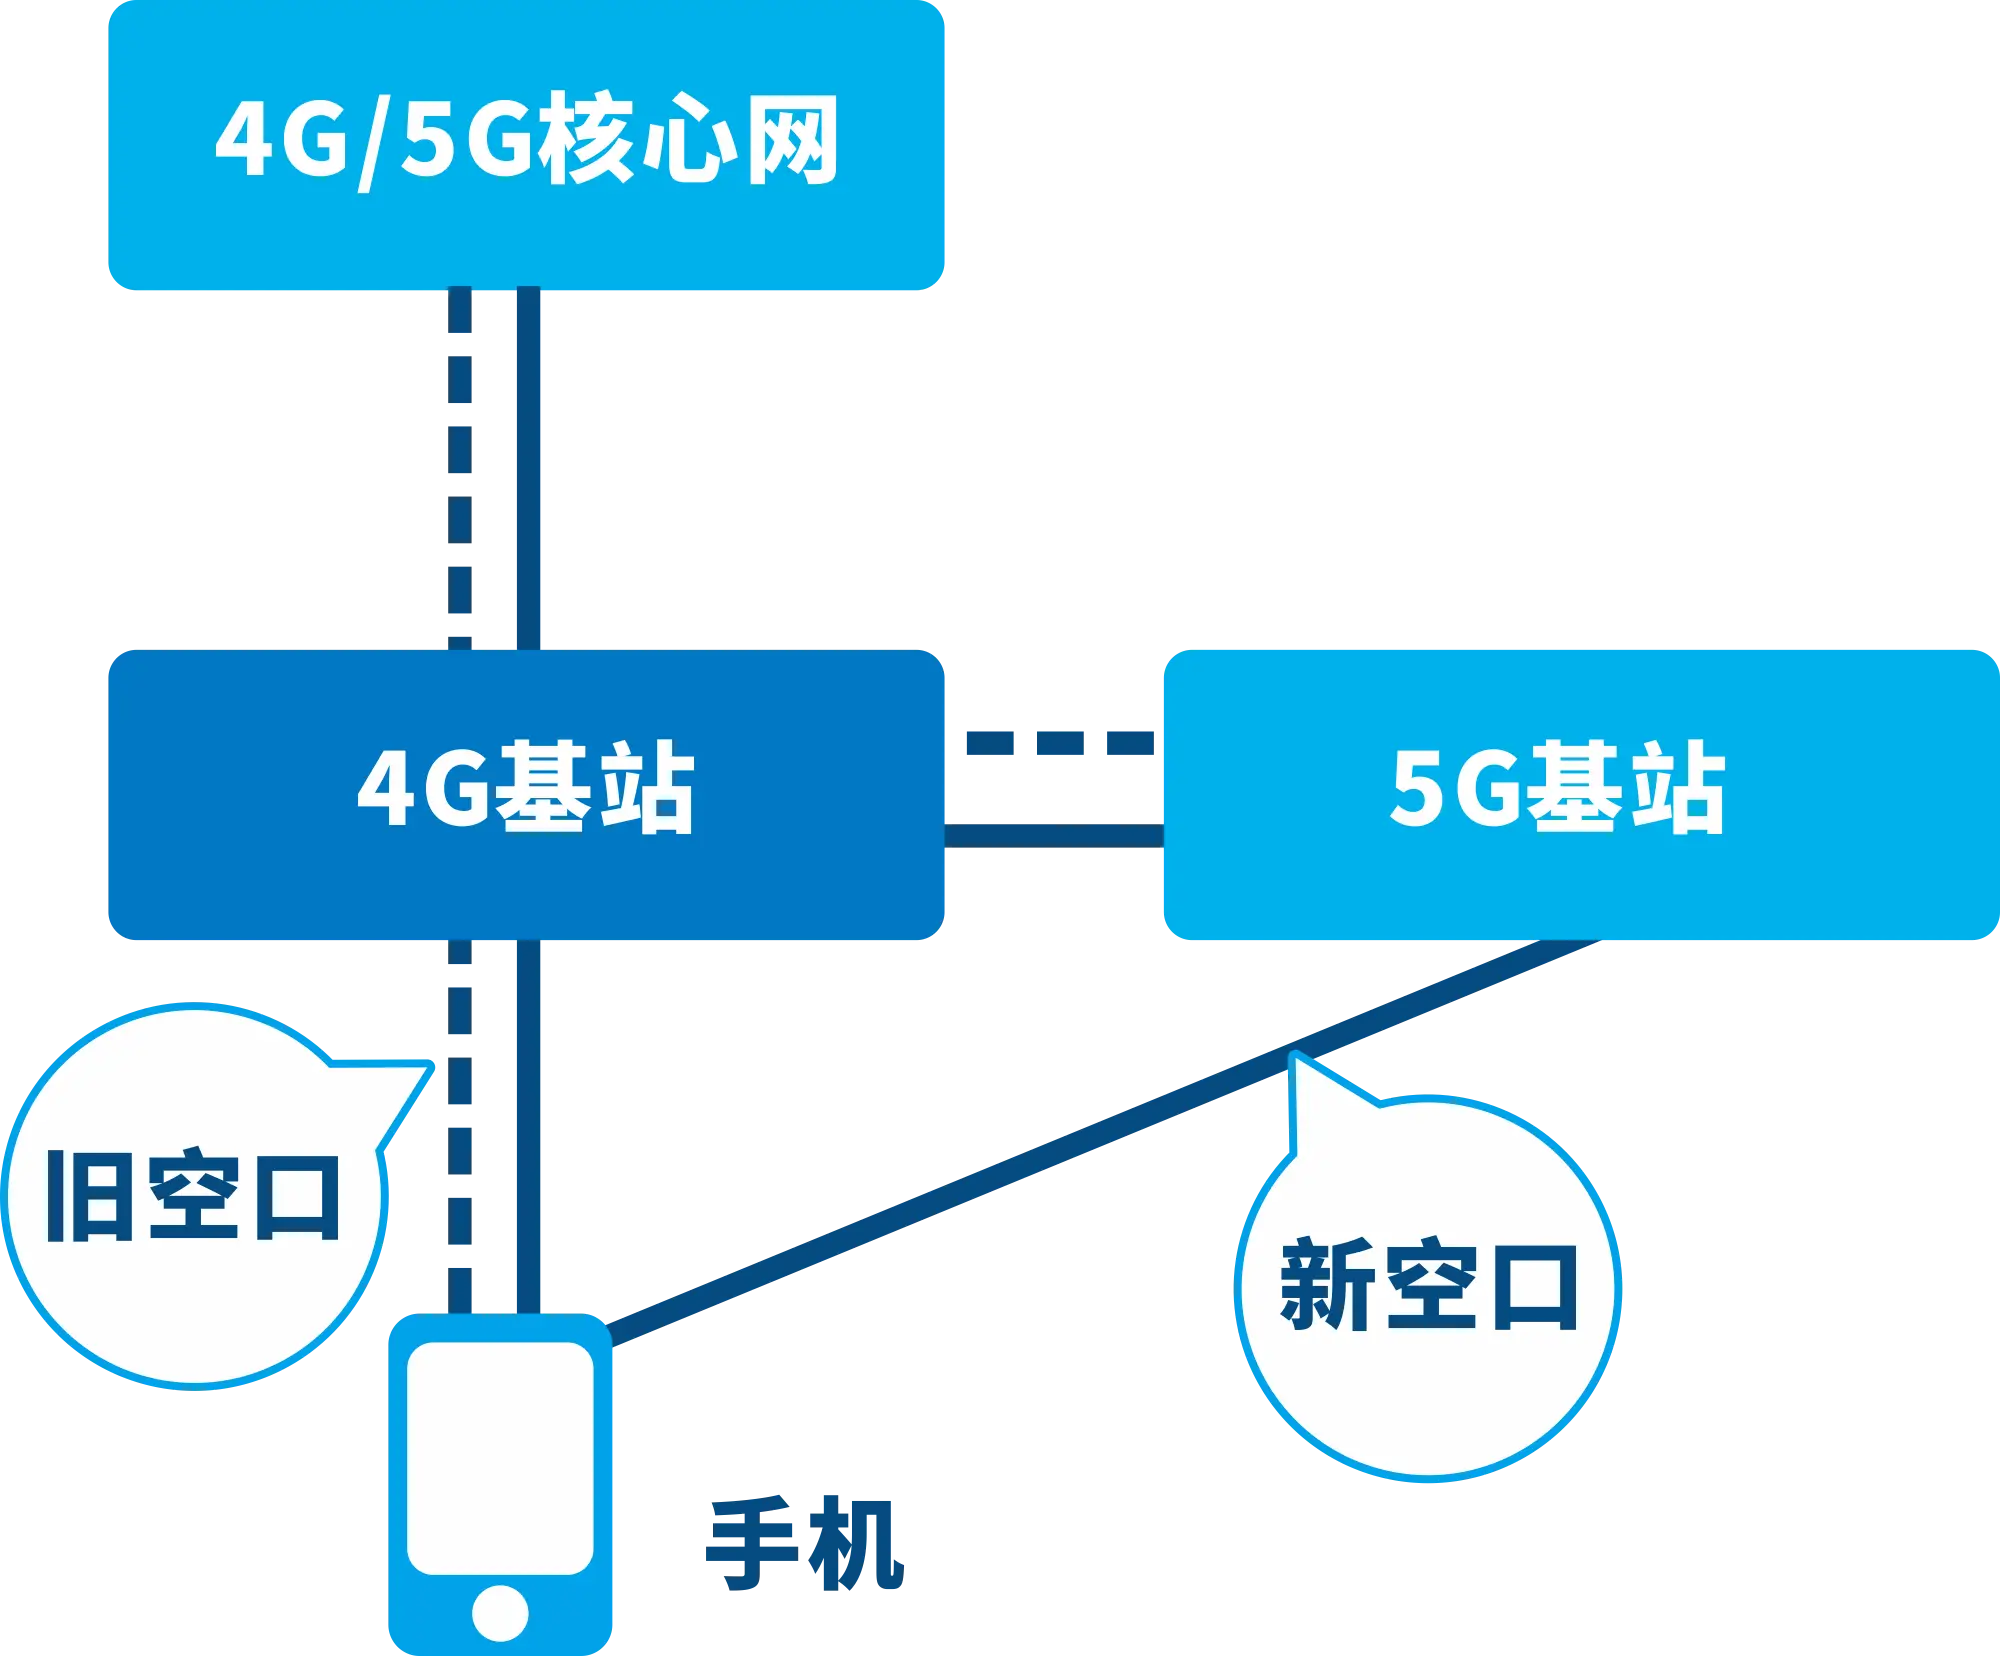 5G 手机 OTA 测试：速度、连接与未来科技的盛会